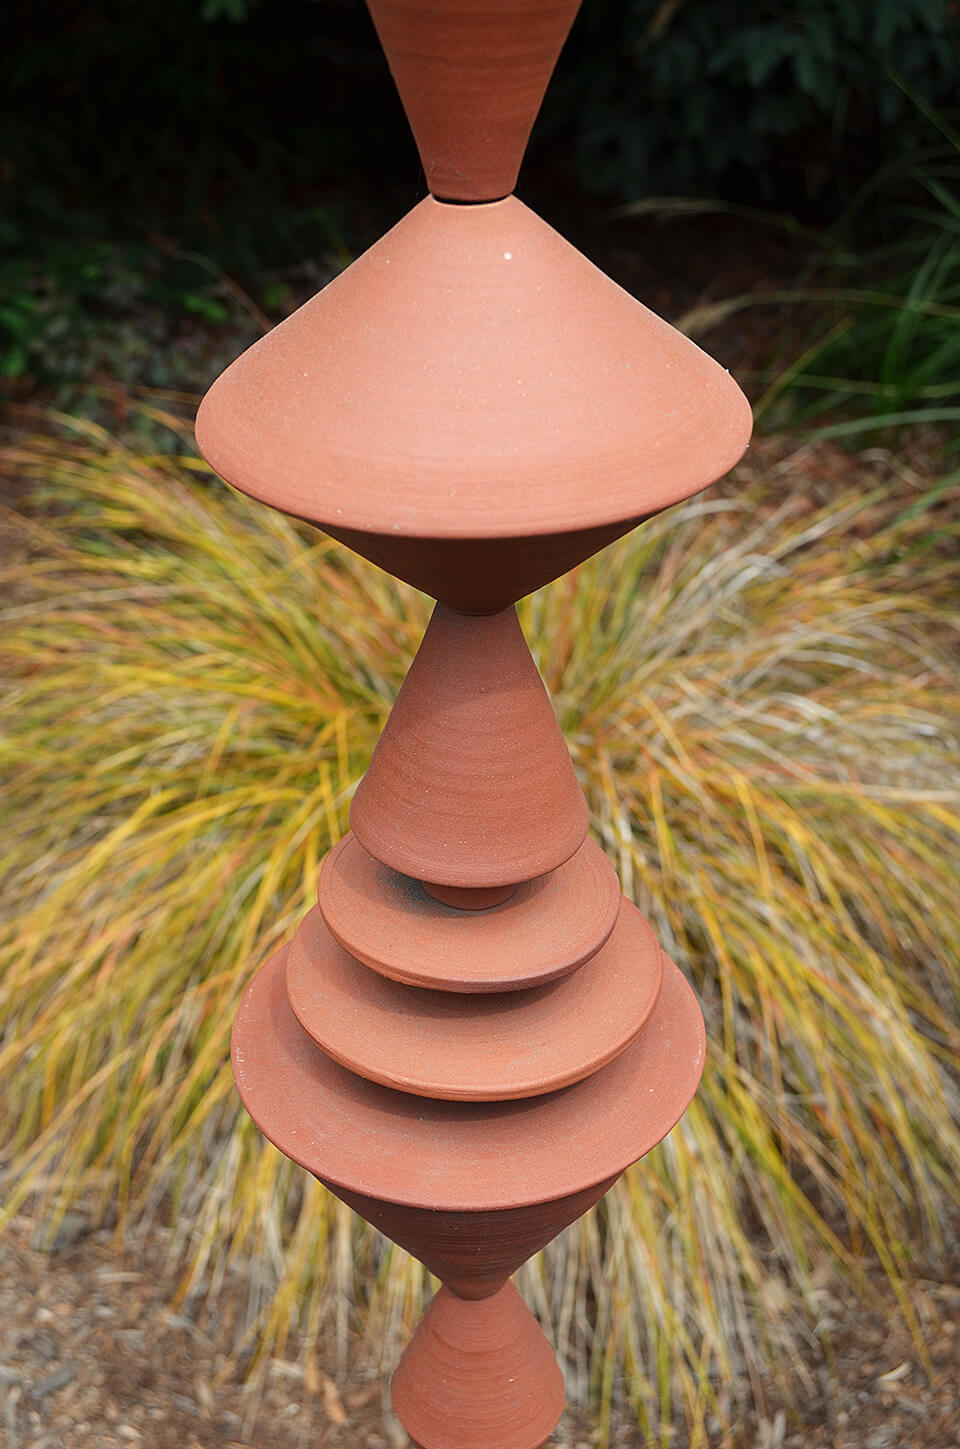 Ceramic Garden Cones by Zuzana Licko 7